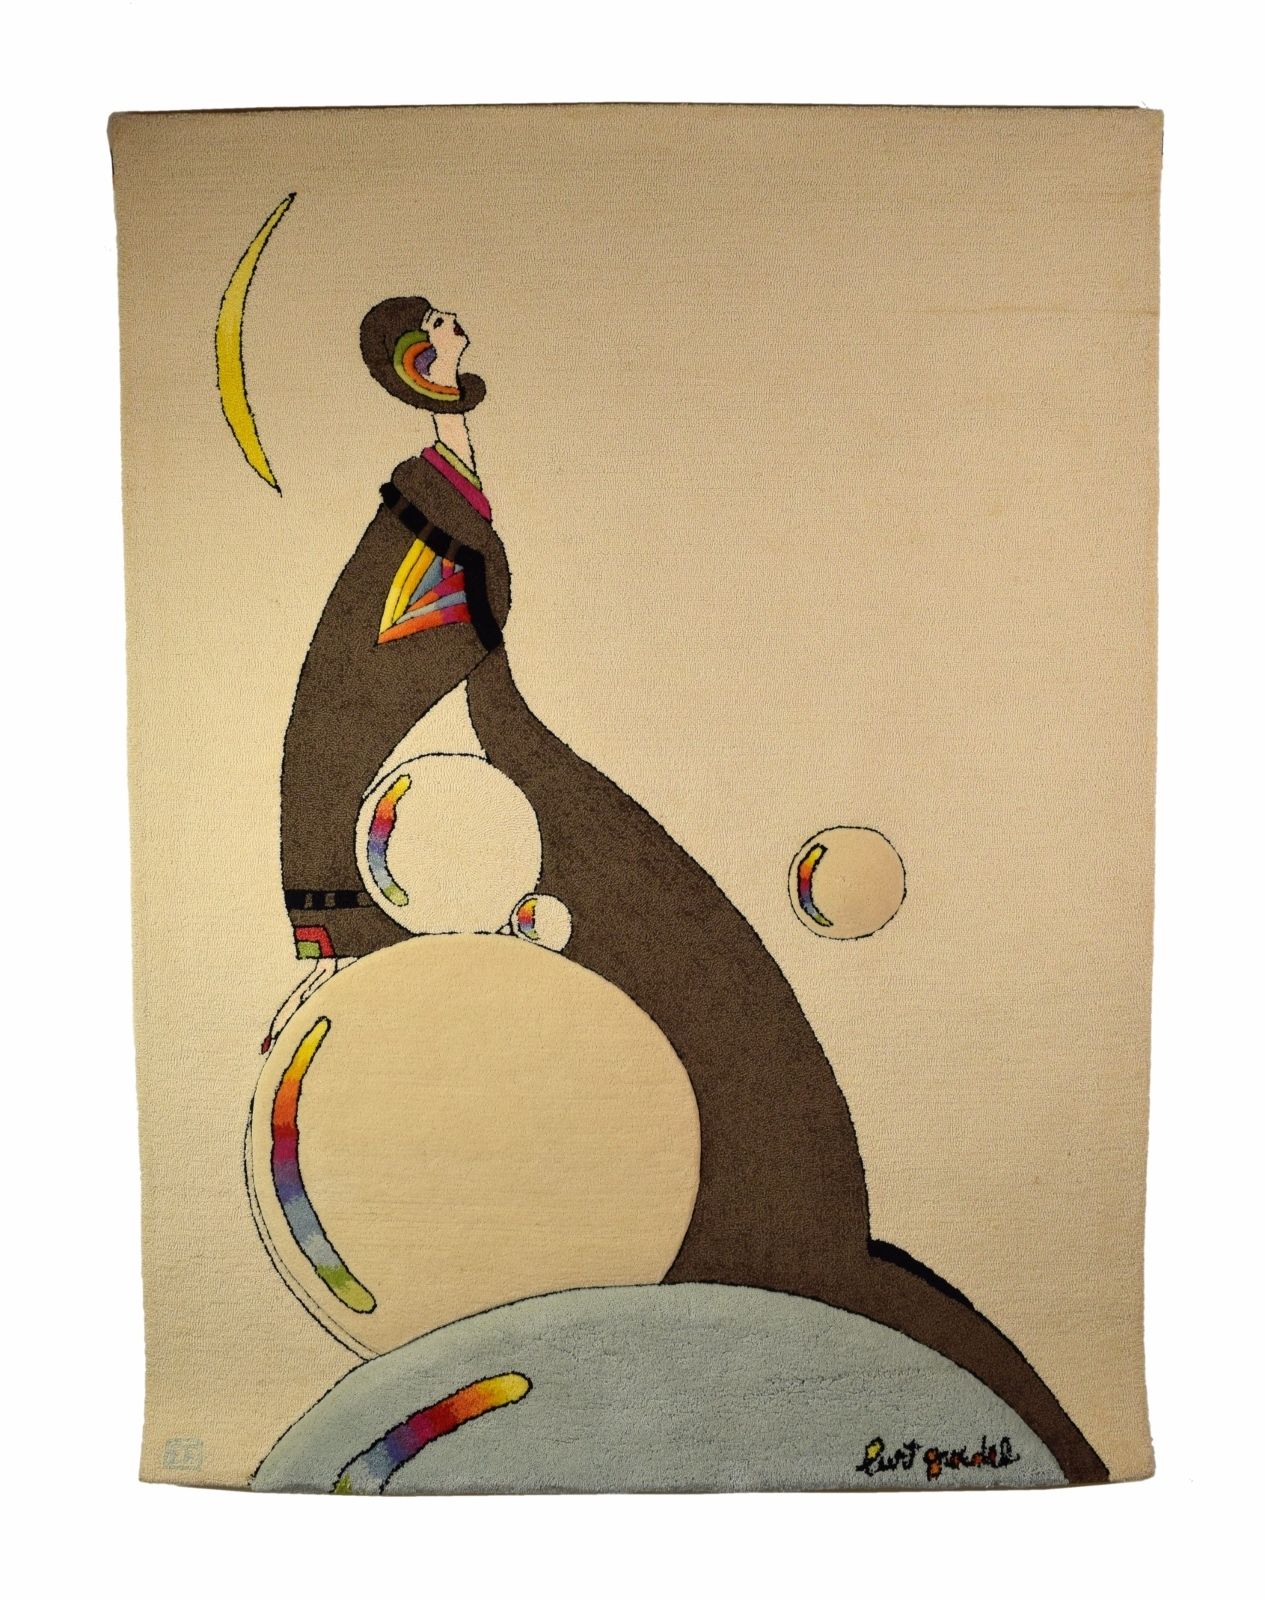 Circa 1970’s Burt Groedel for Edward Fields Supreme Highness Carpet Tapestry